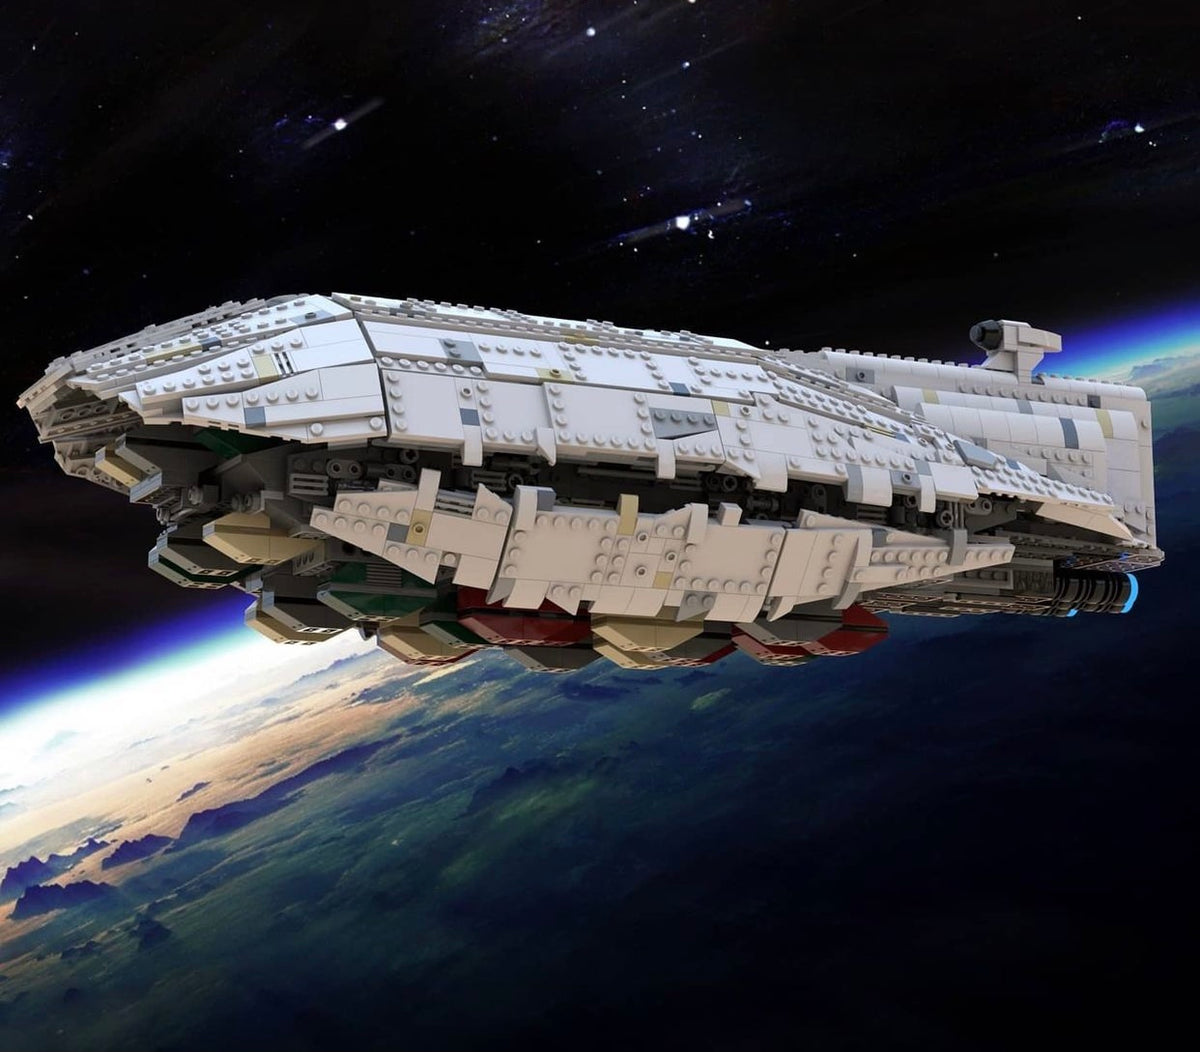 star wars rebel transport